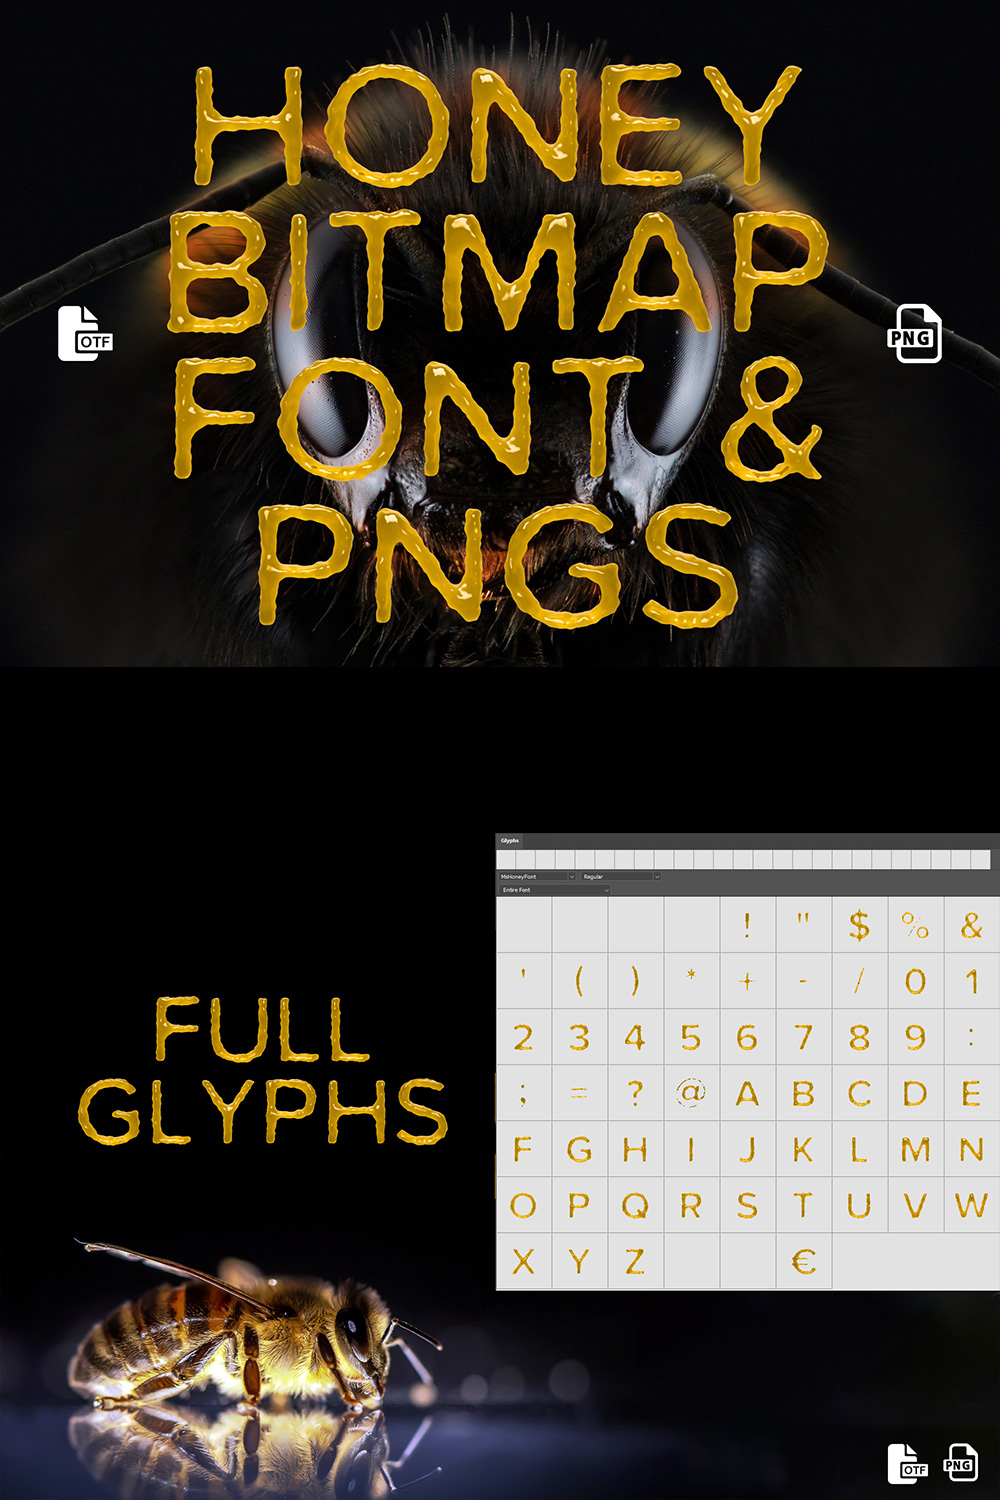 Ms Honey Bitmap Font and PNG pinterest image.